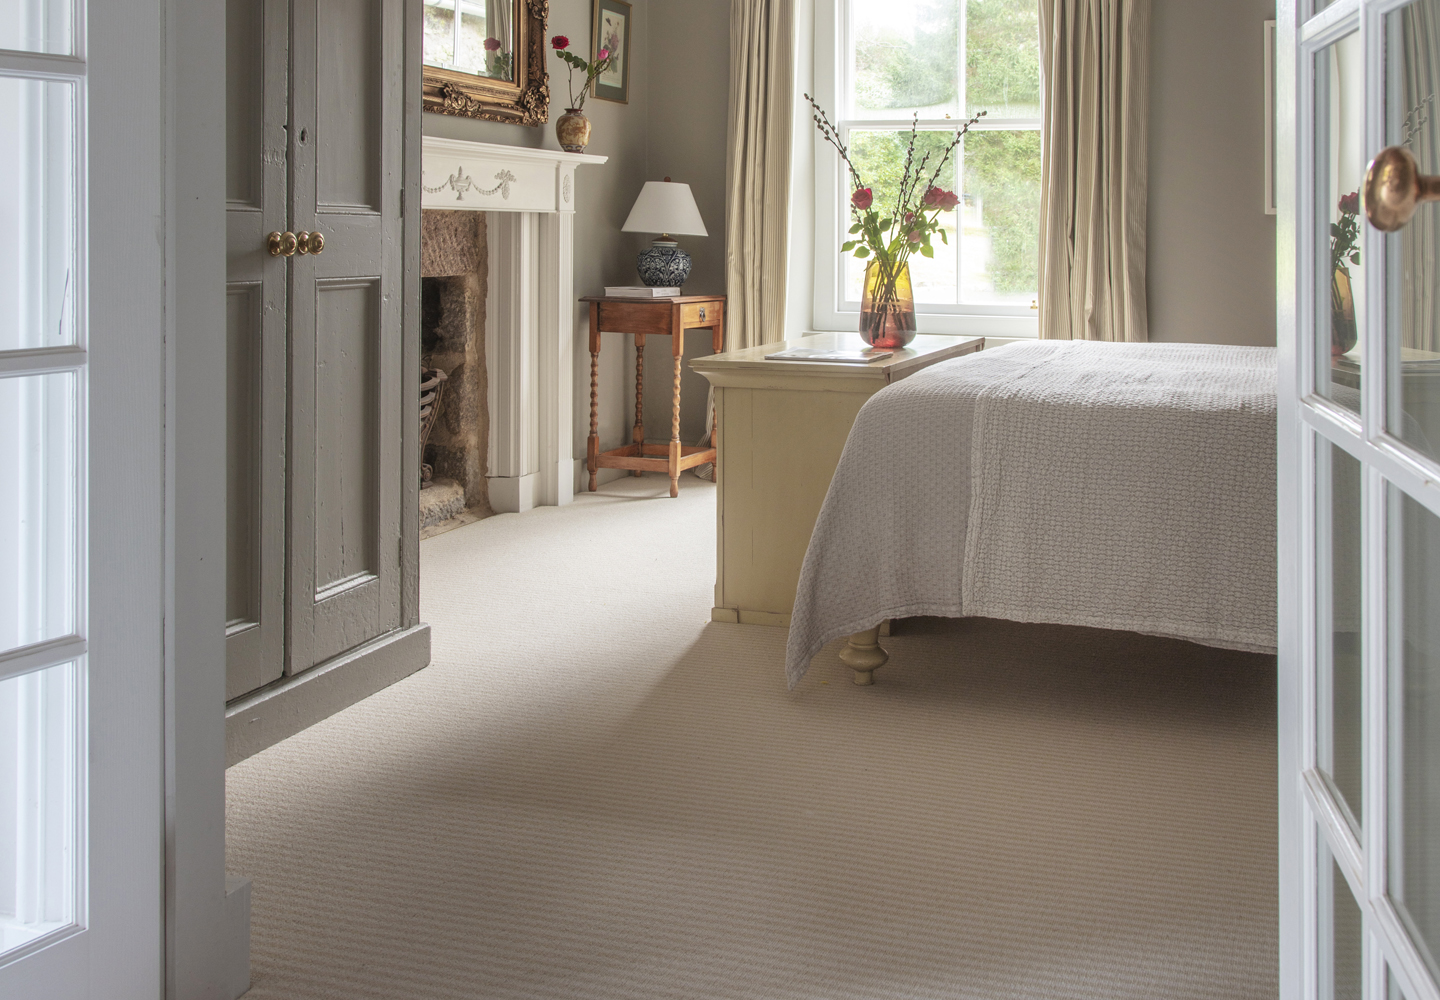 Alternative Flooring At Home, Christina Horspool, Manar House, Wool Rhythm Striped Carpet